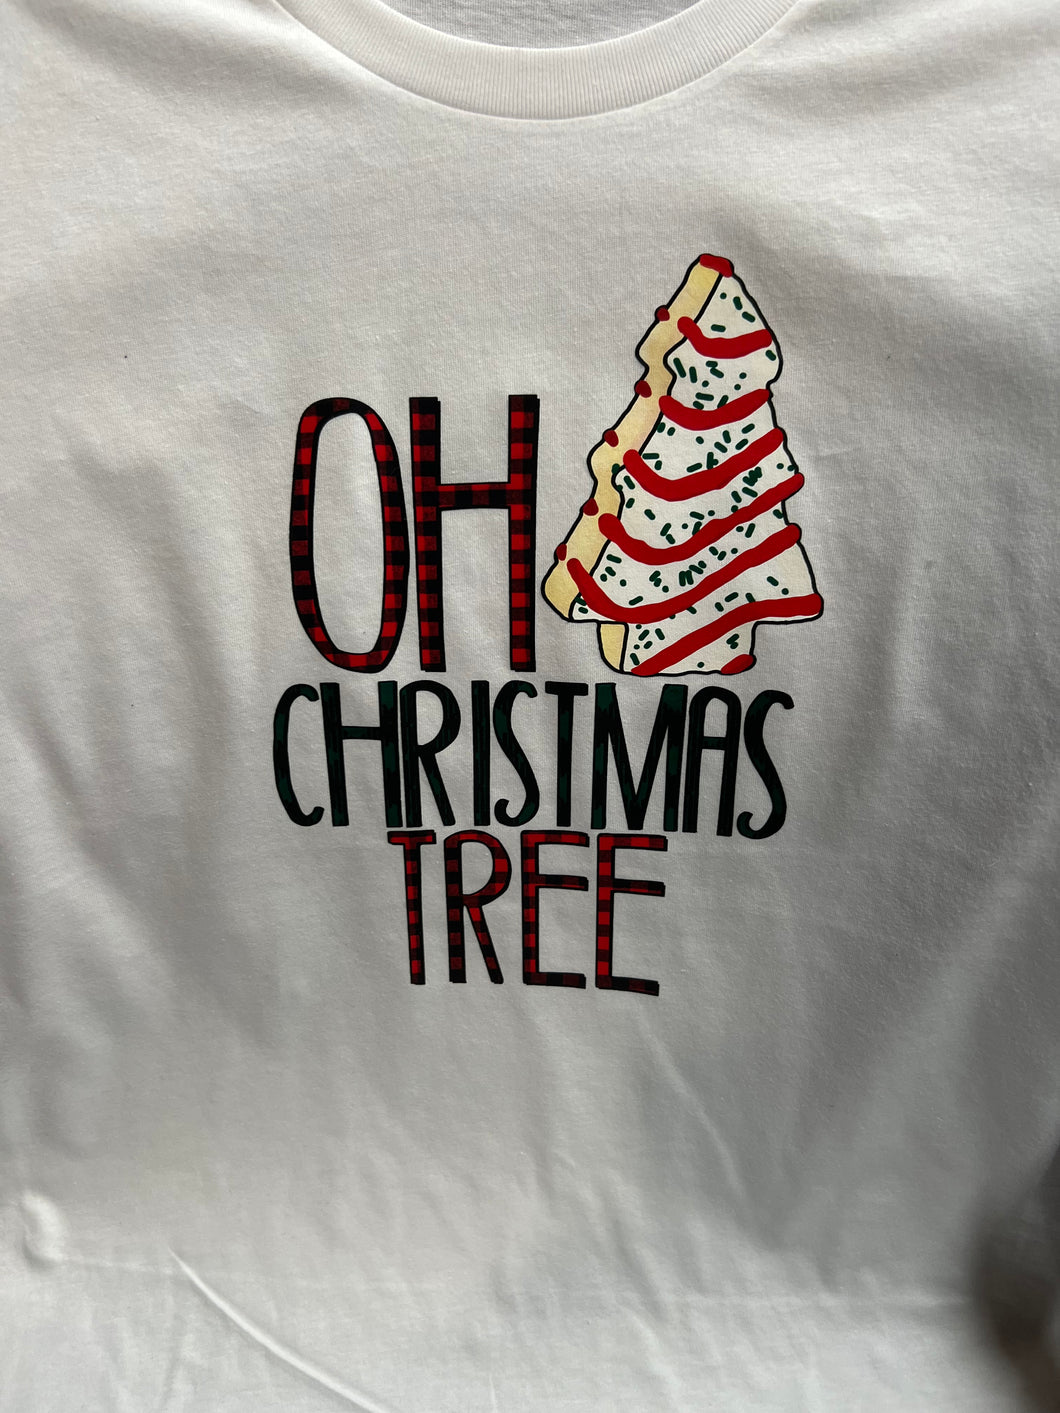 Oh Christmas Tree Shirt - Size Medium